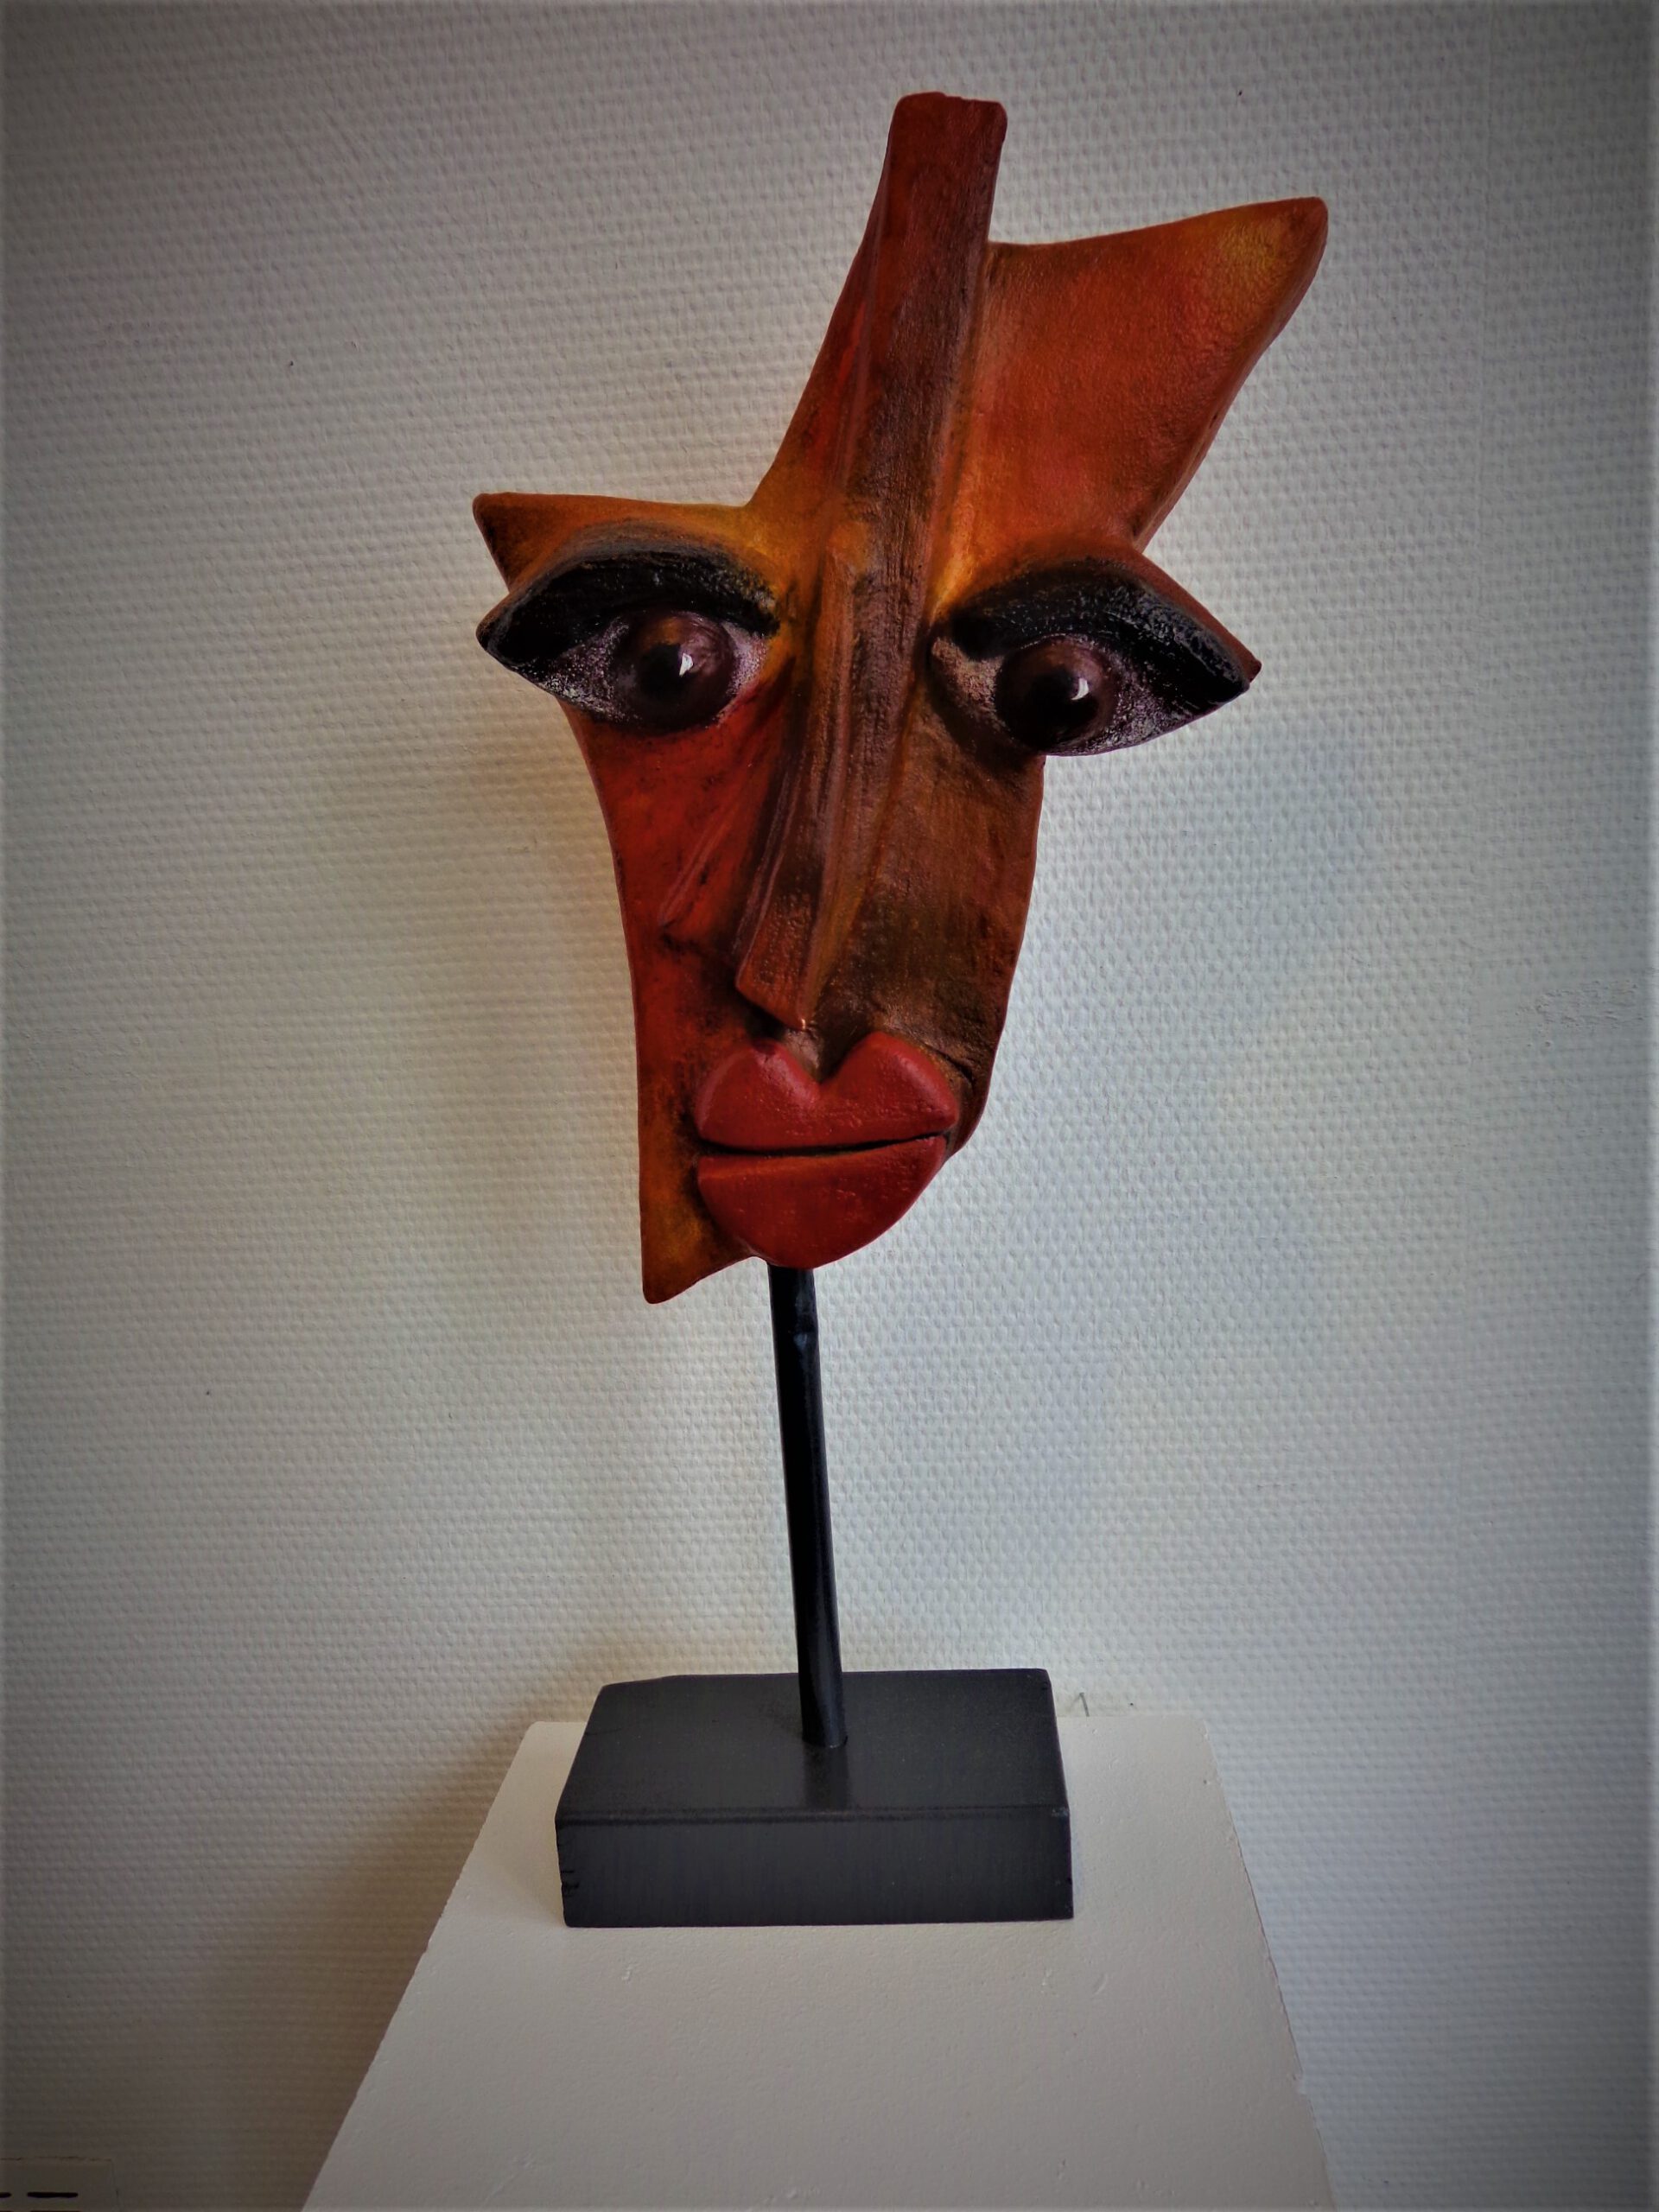 Maske, 58 cm hoch